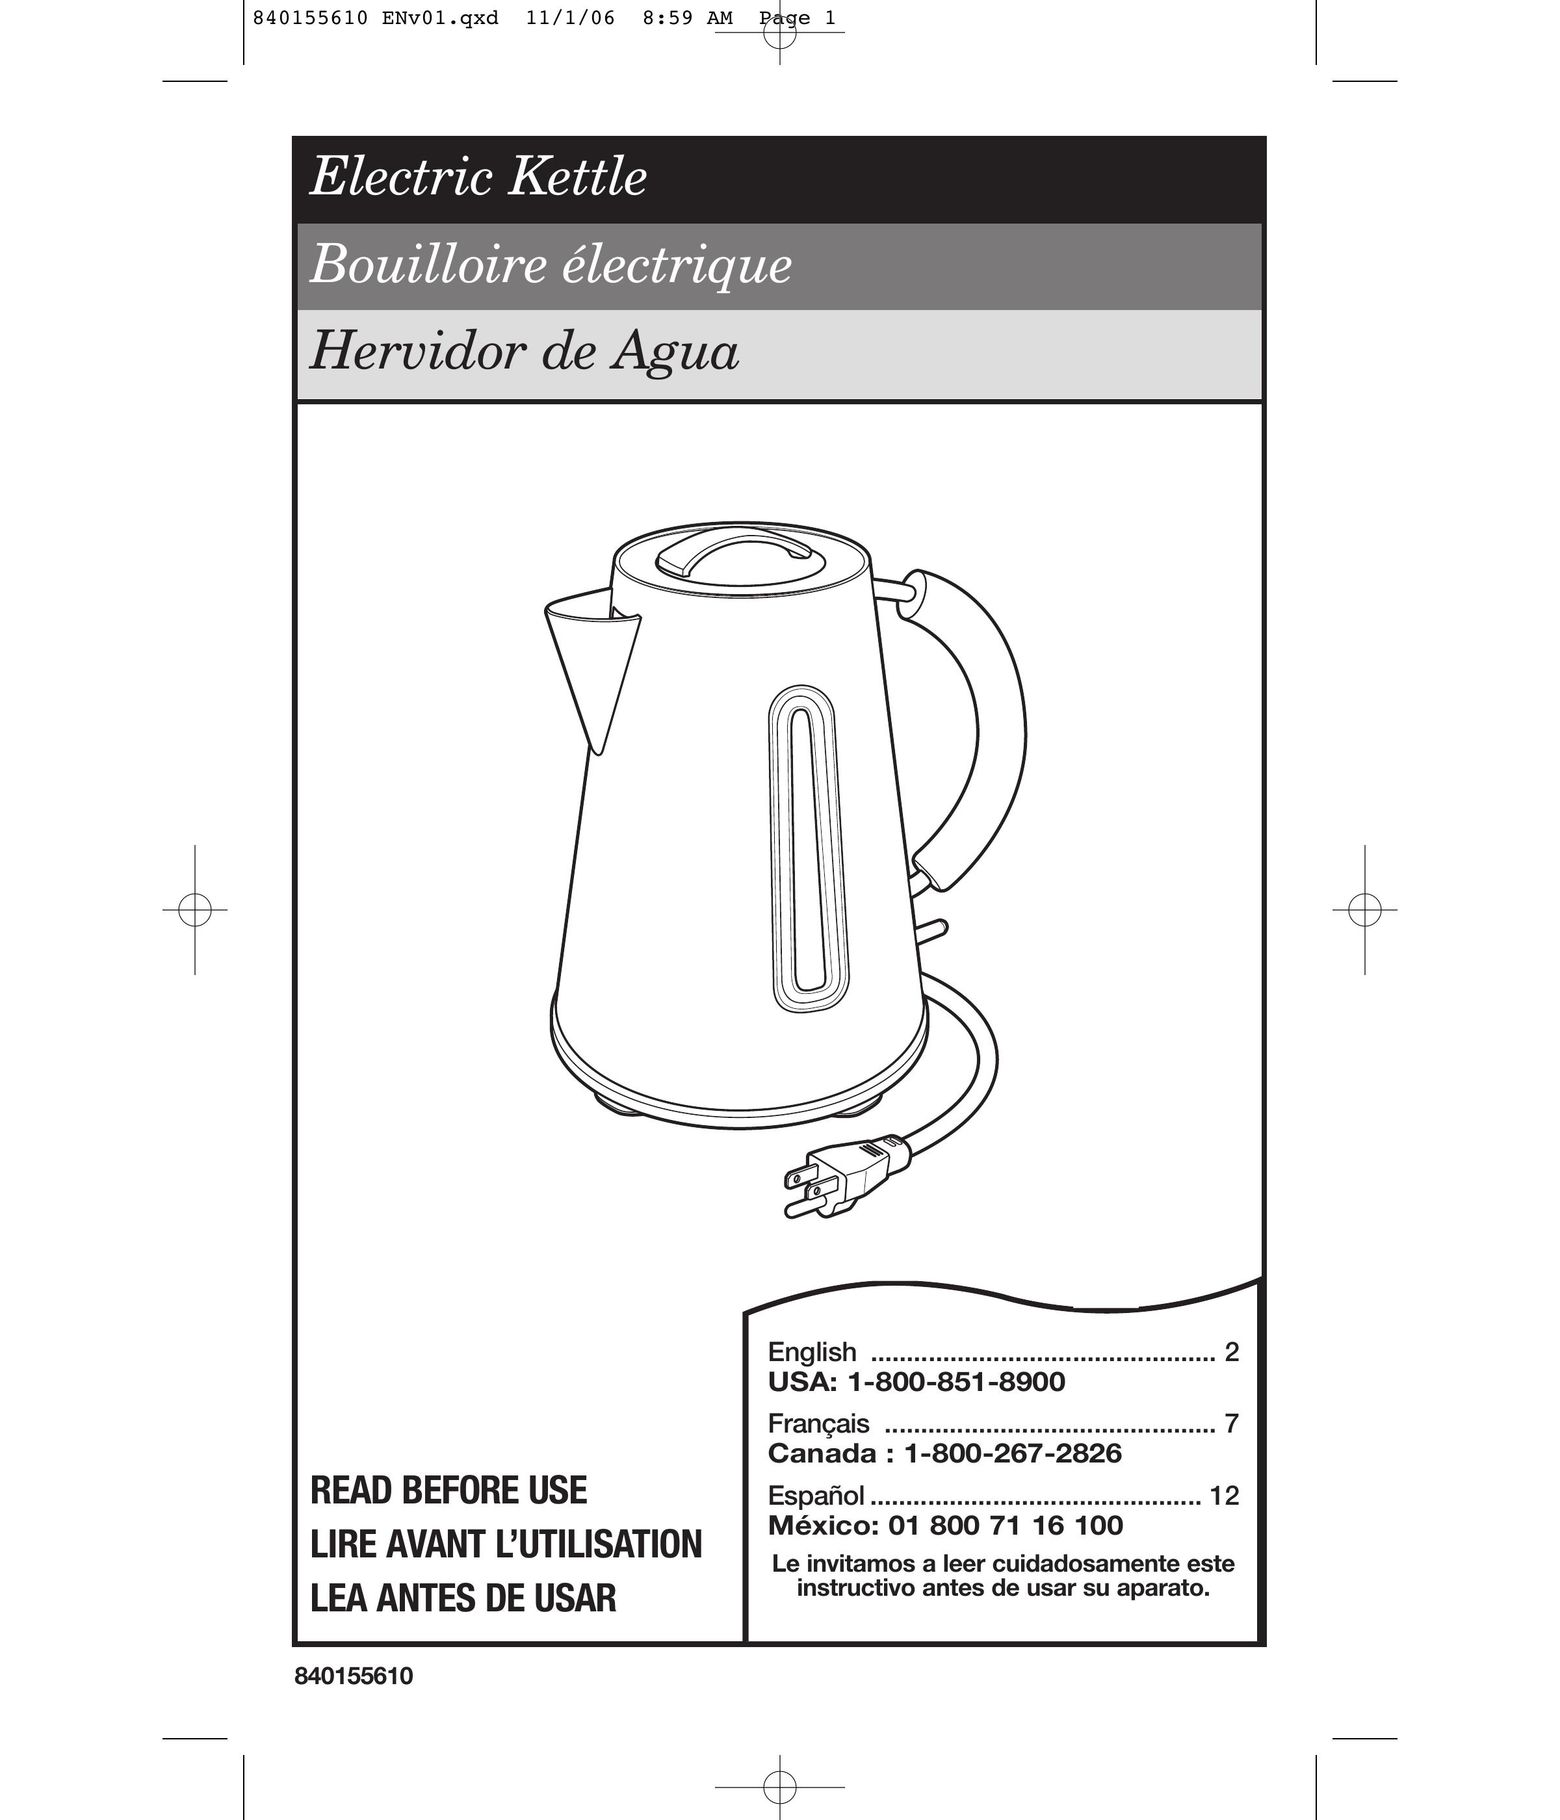 Hamilton Beach 840155610 Hot Beverage Maker User Manual